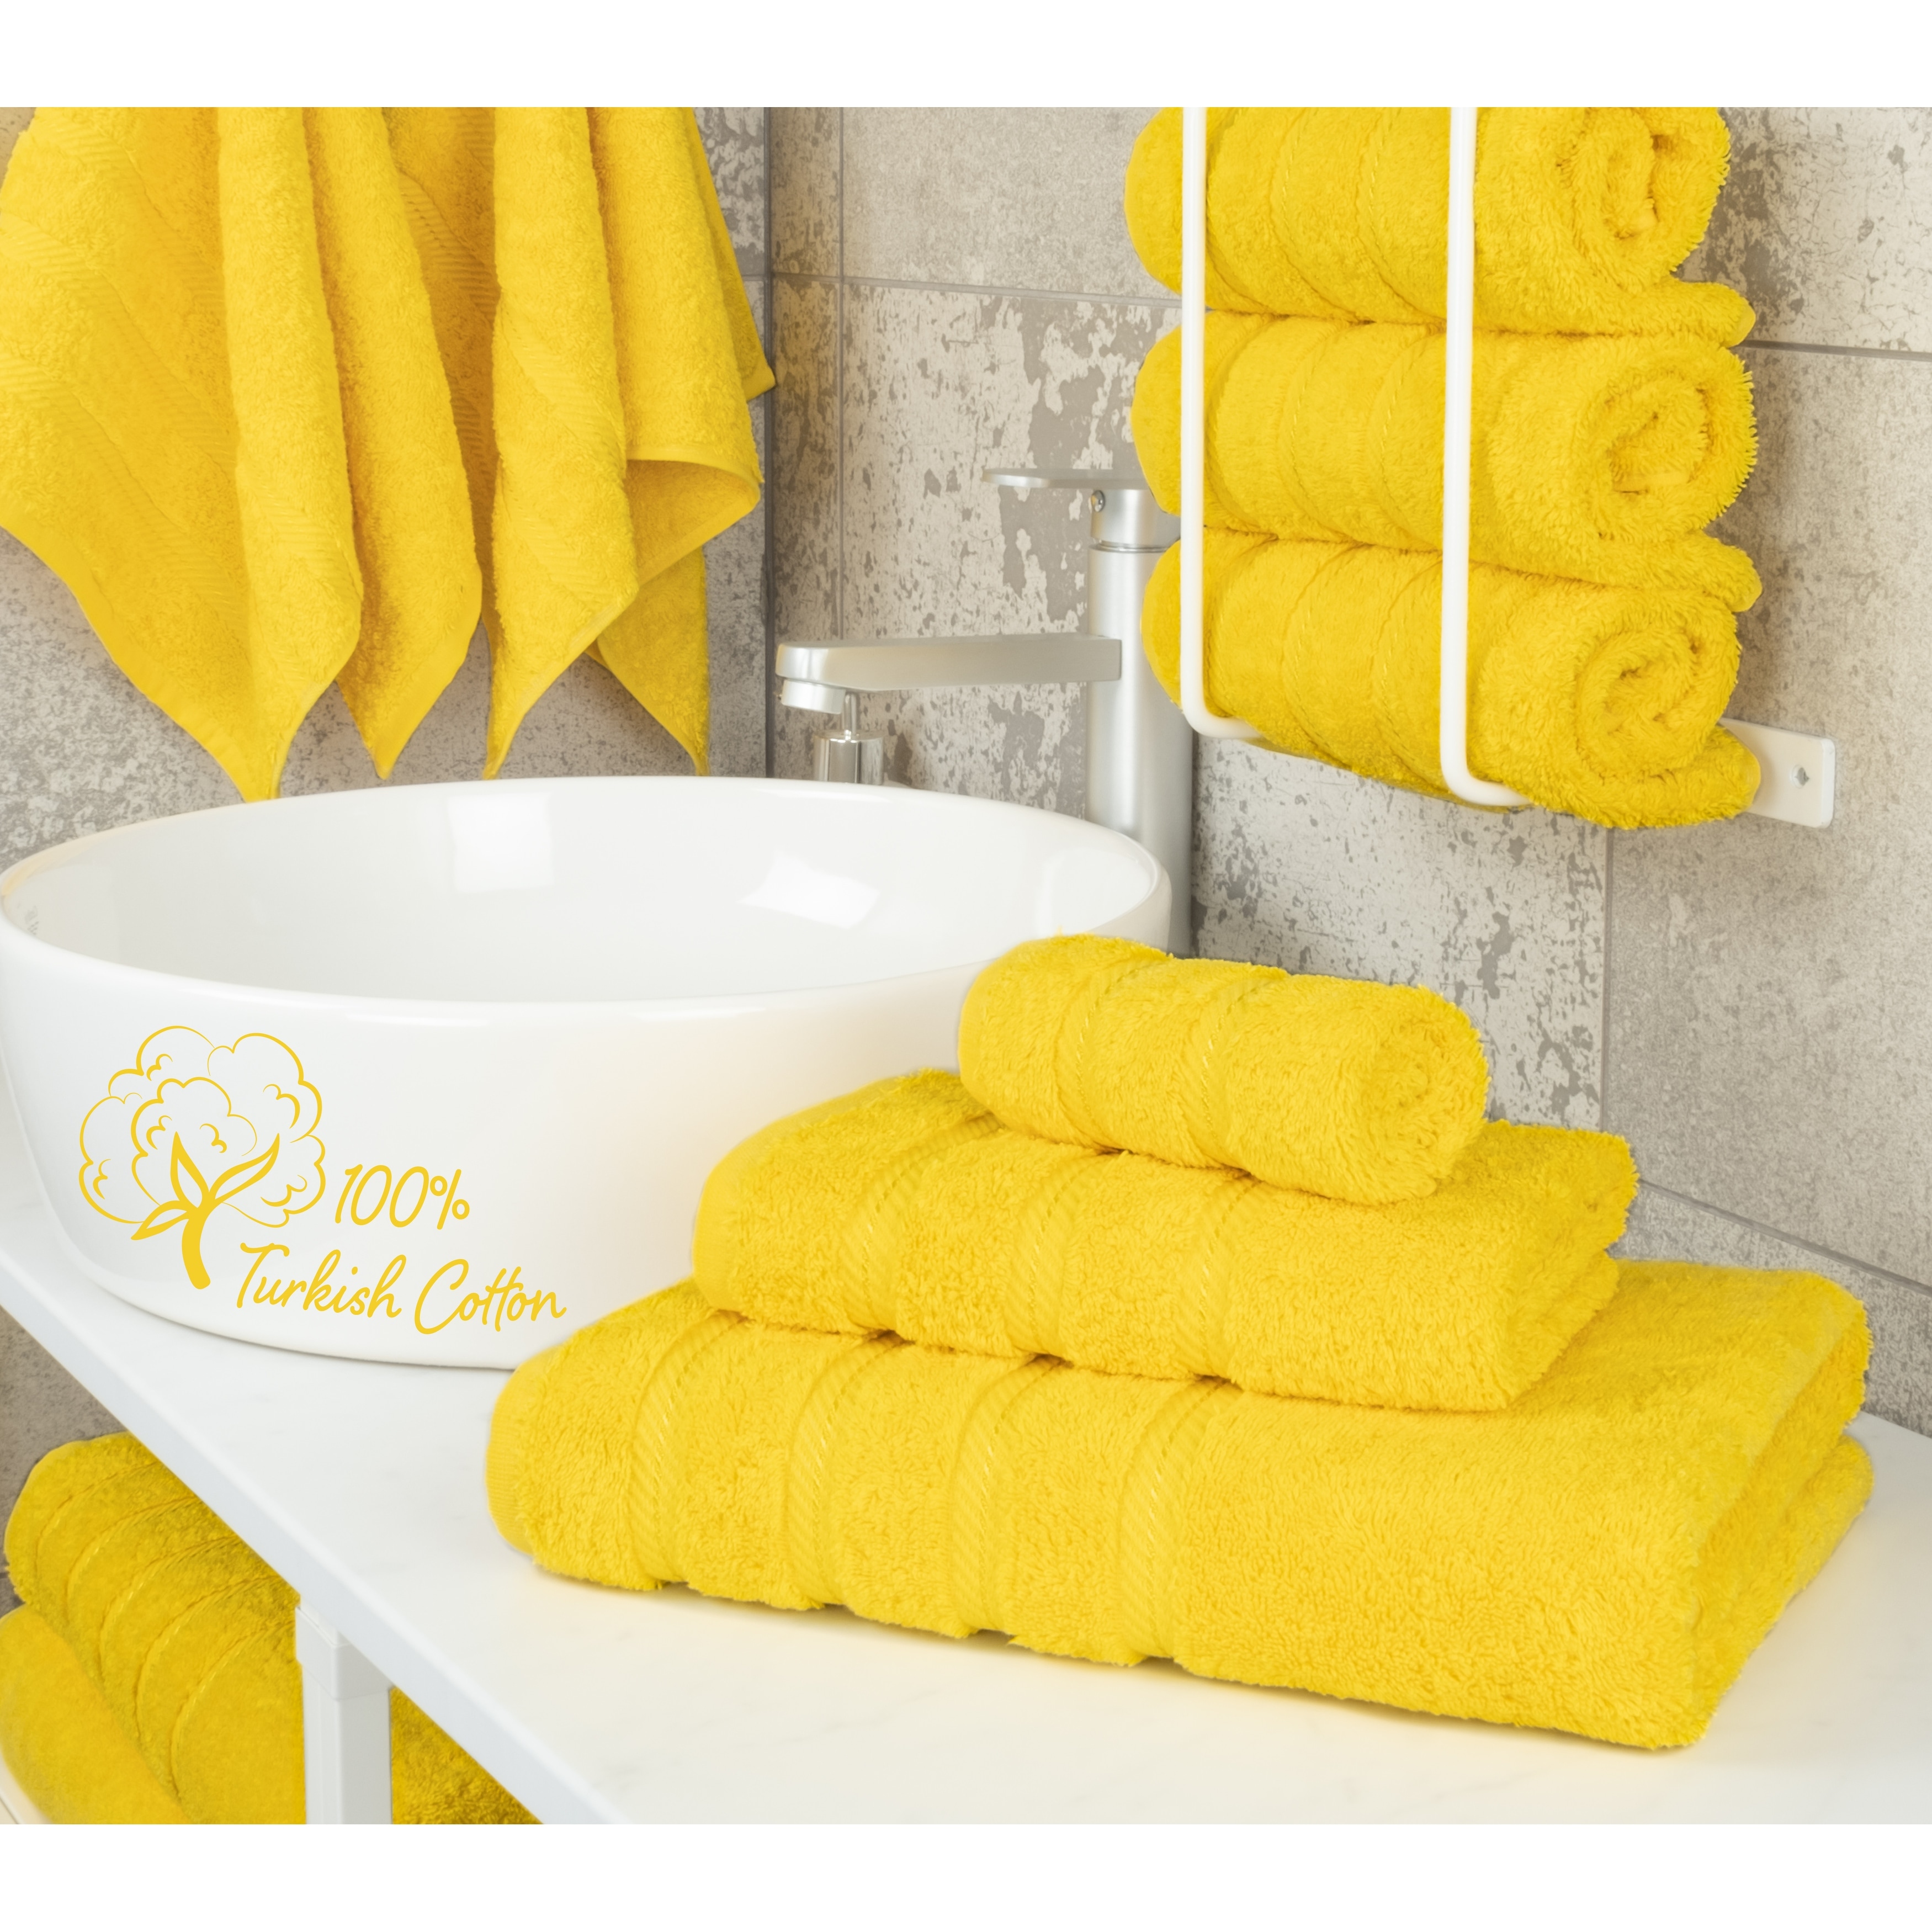 https://ak1.ostkcdn.com/images/products/is/images/direct/cb1fe2ec1f2f223d11816d6d80992eee722ea9ad/American-Soft-Linen-3-Piece%2C-100%25-Genuine-Turkish-Cotton-Premium-%26-Luxury-Towels-Bathroom-Sets.jpg